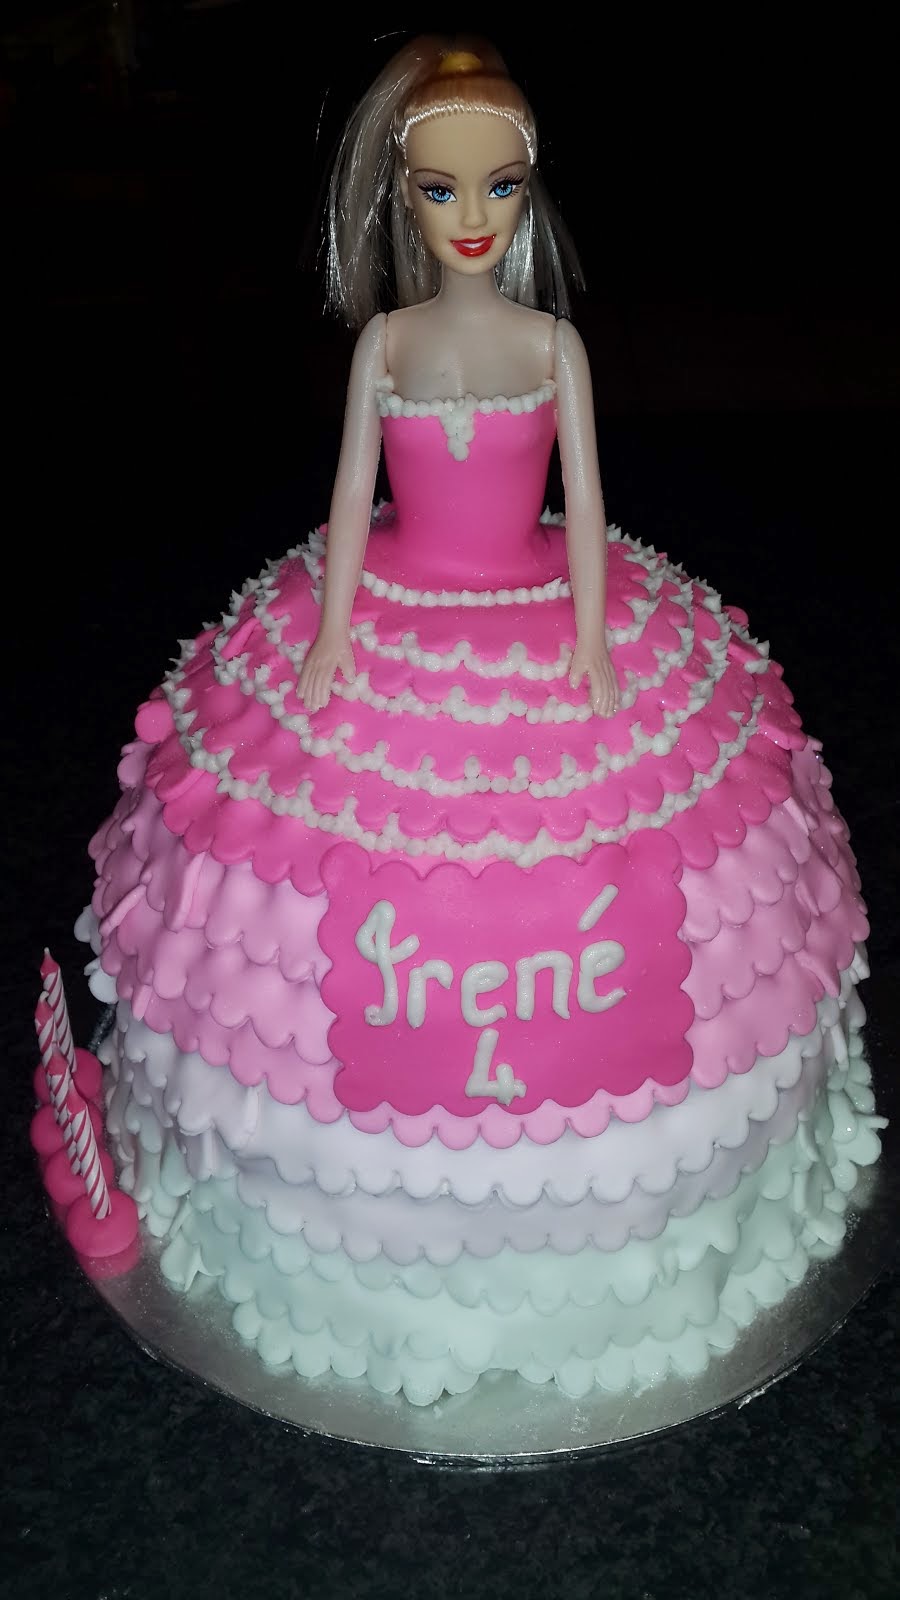 Barbie cake for Irenè